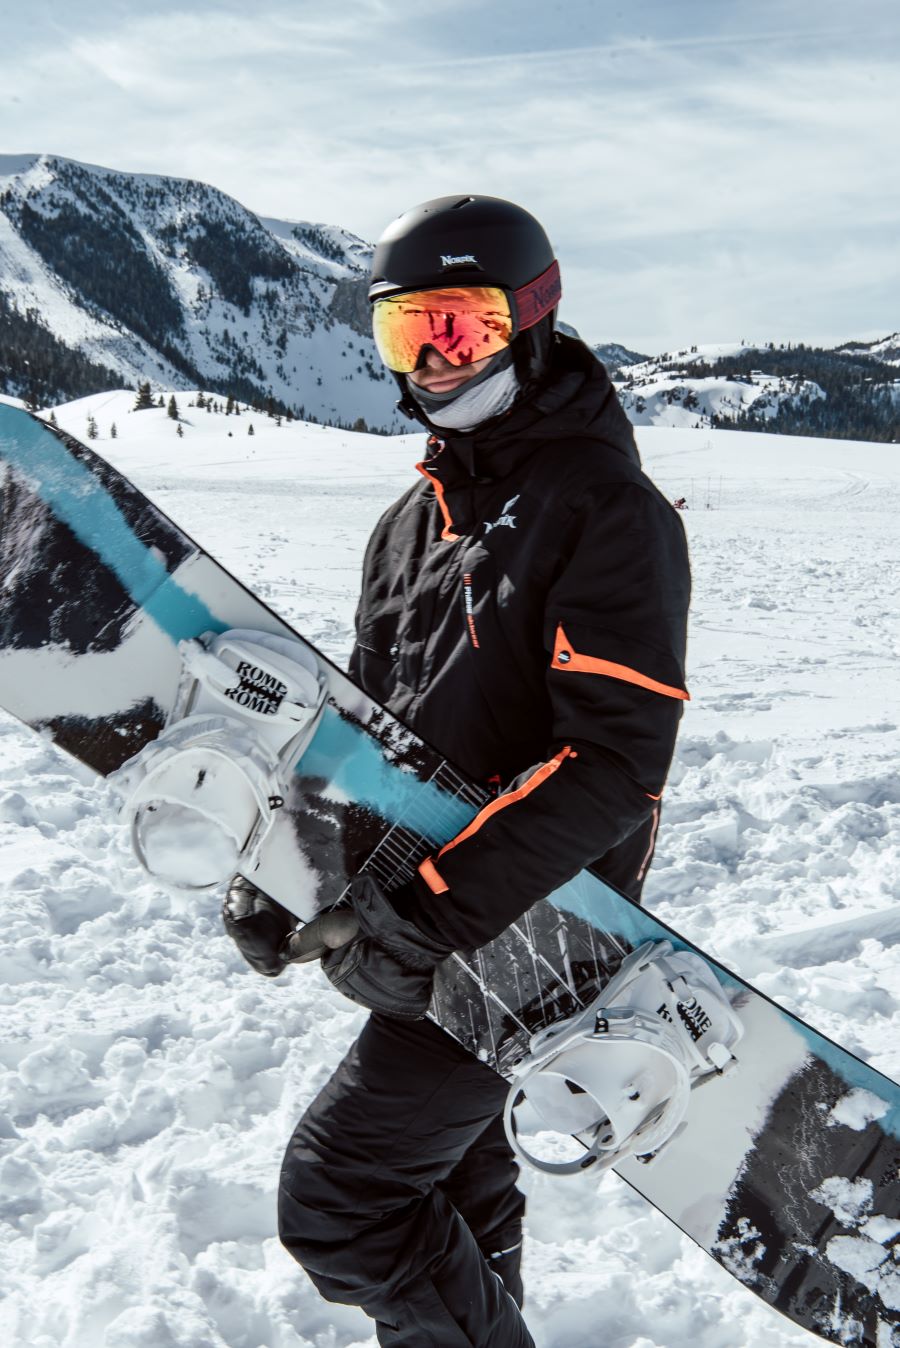 rossignol snowboard price